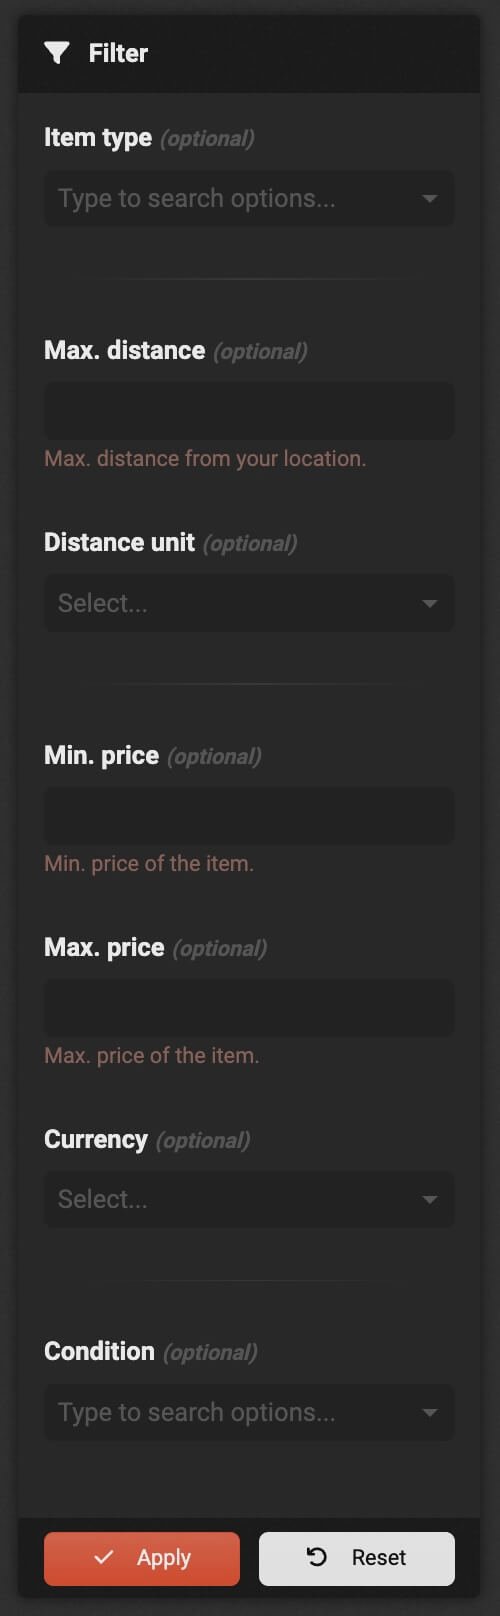 marketplace-screenshot-5.jpg